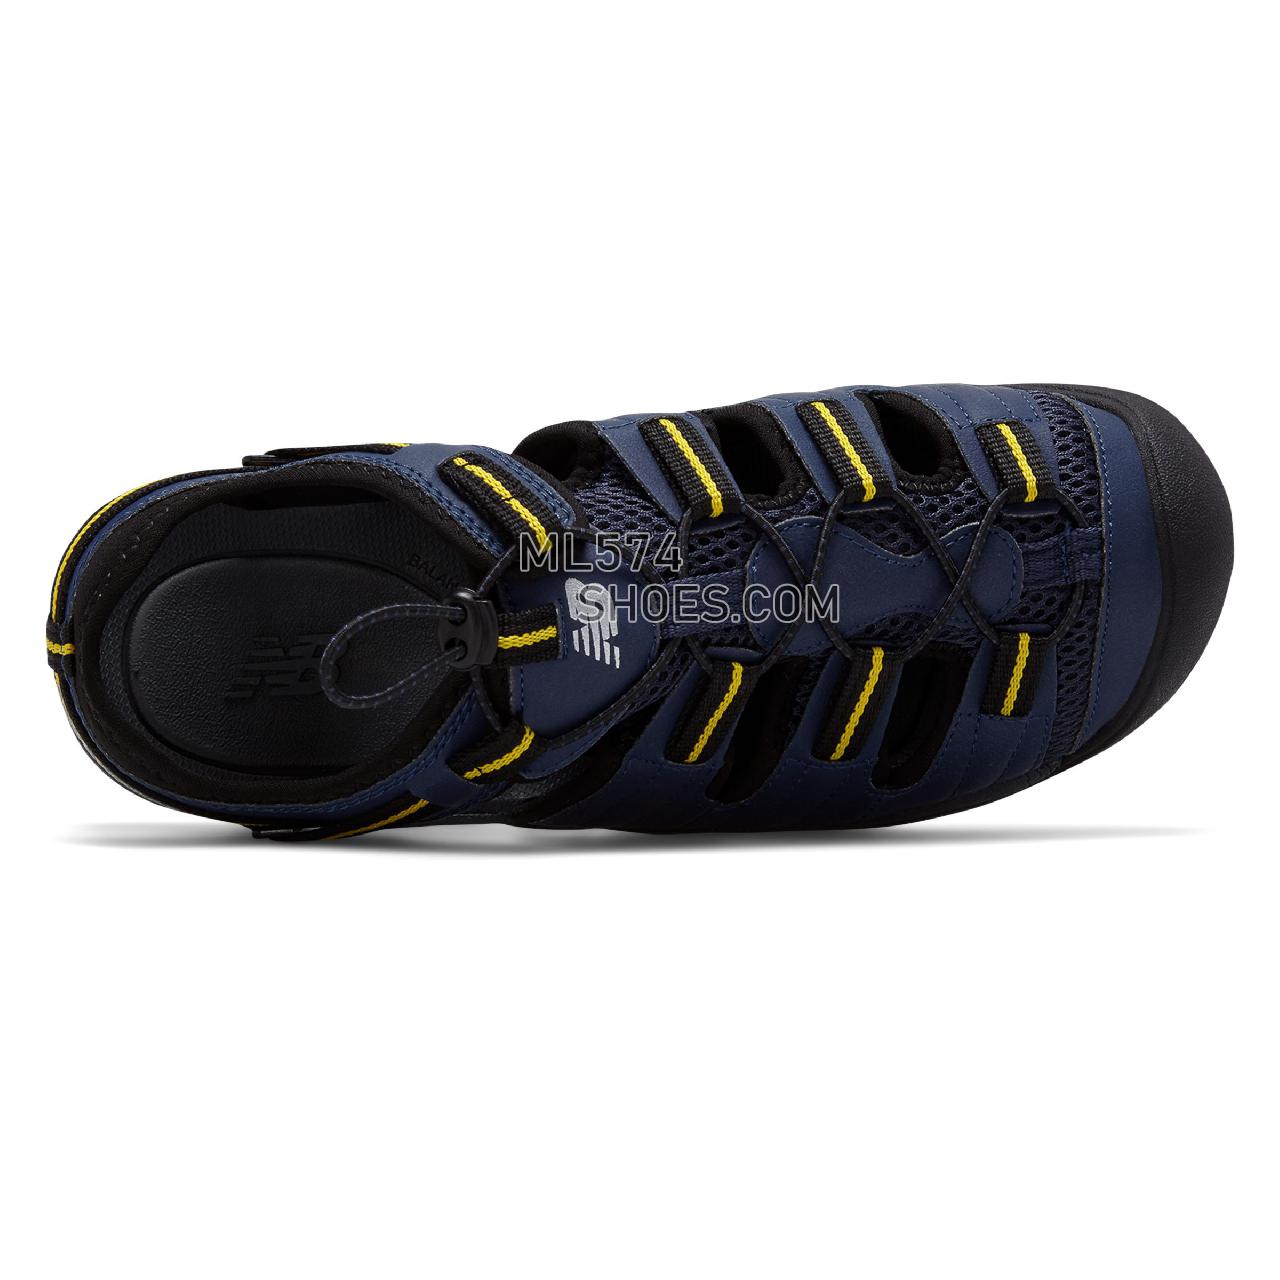 New Balance Appalachian Sandal - Men's 2040 - Sandals Navy with Yellow - M2040NV